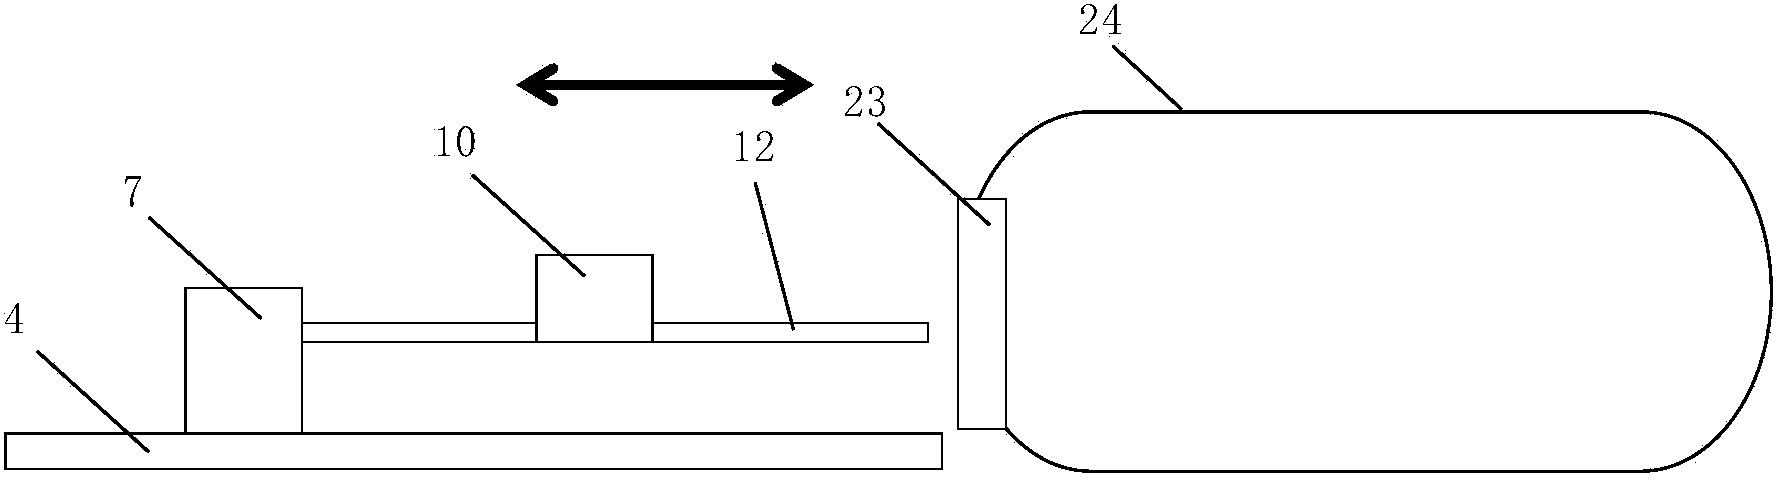 Automatic feeding device of horizontal diffusion furnace